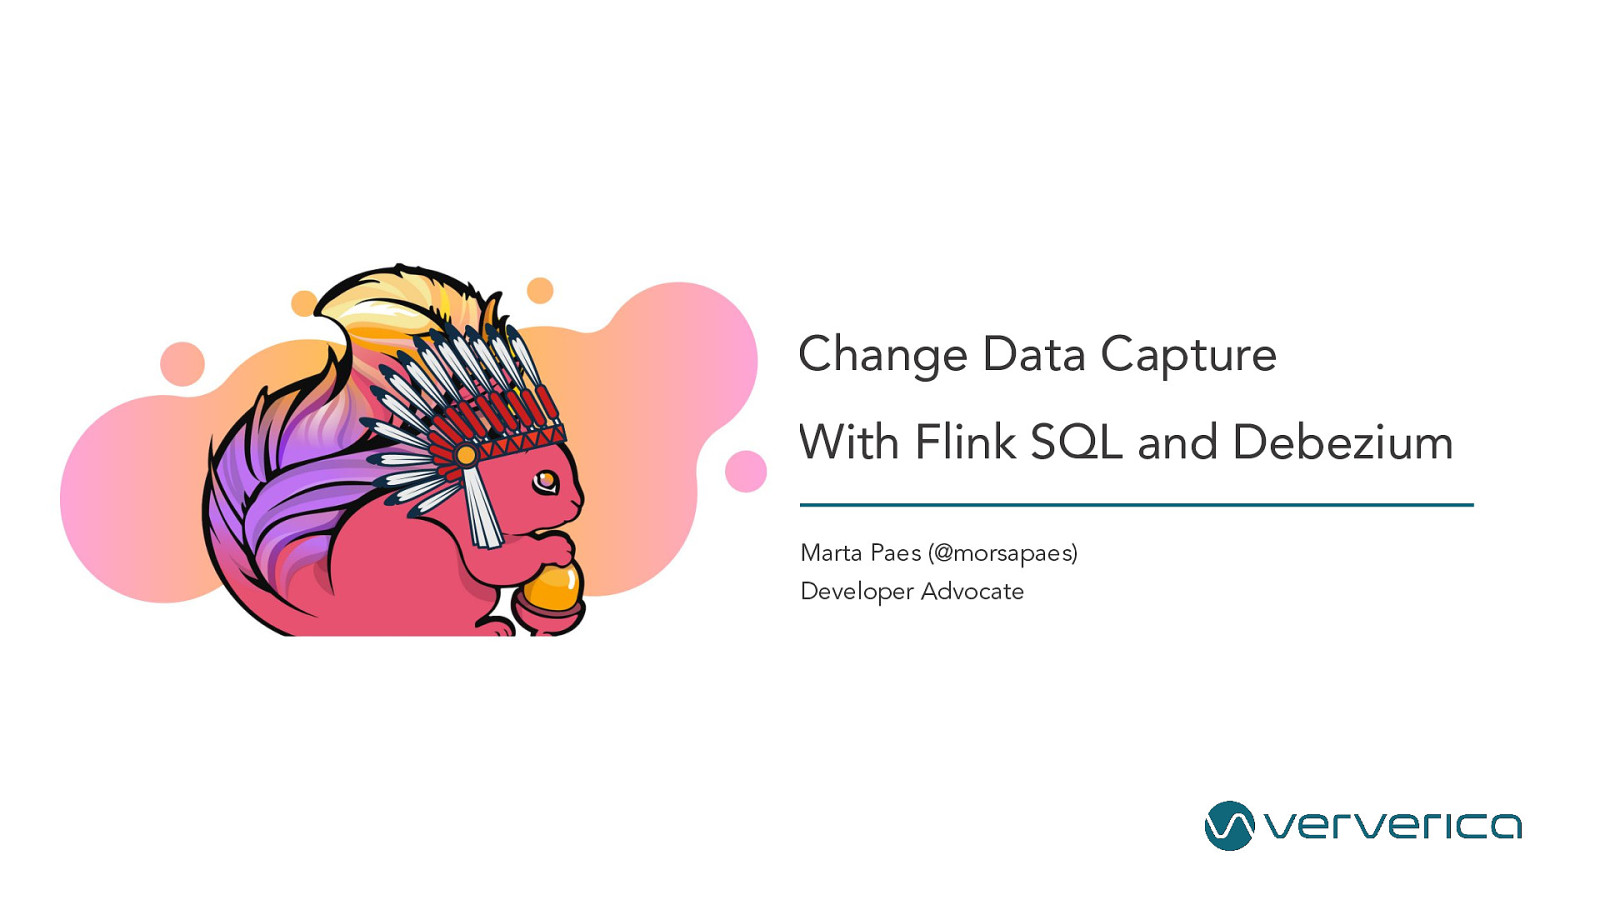 Change Data Capture with Flink SQL and Debezium